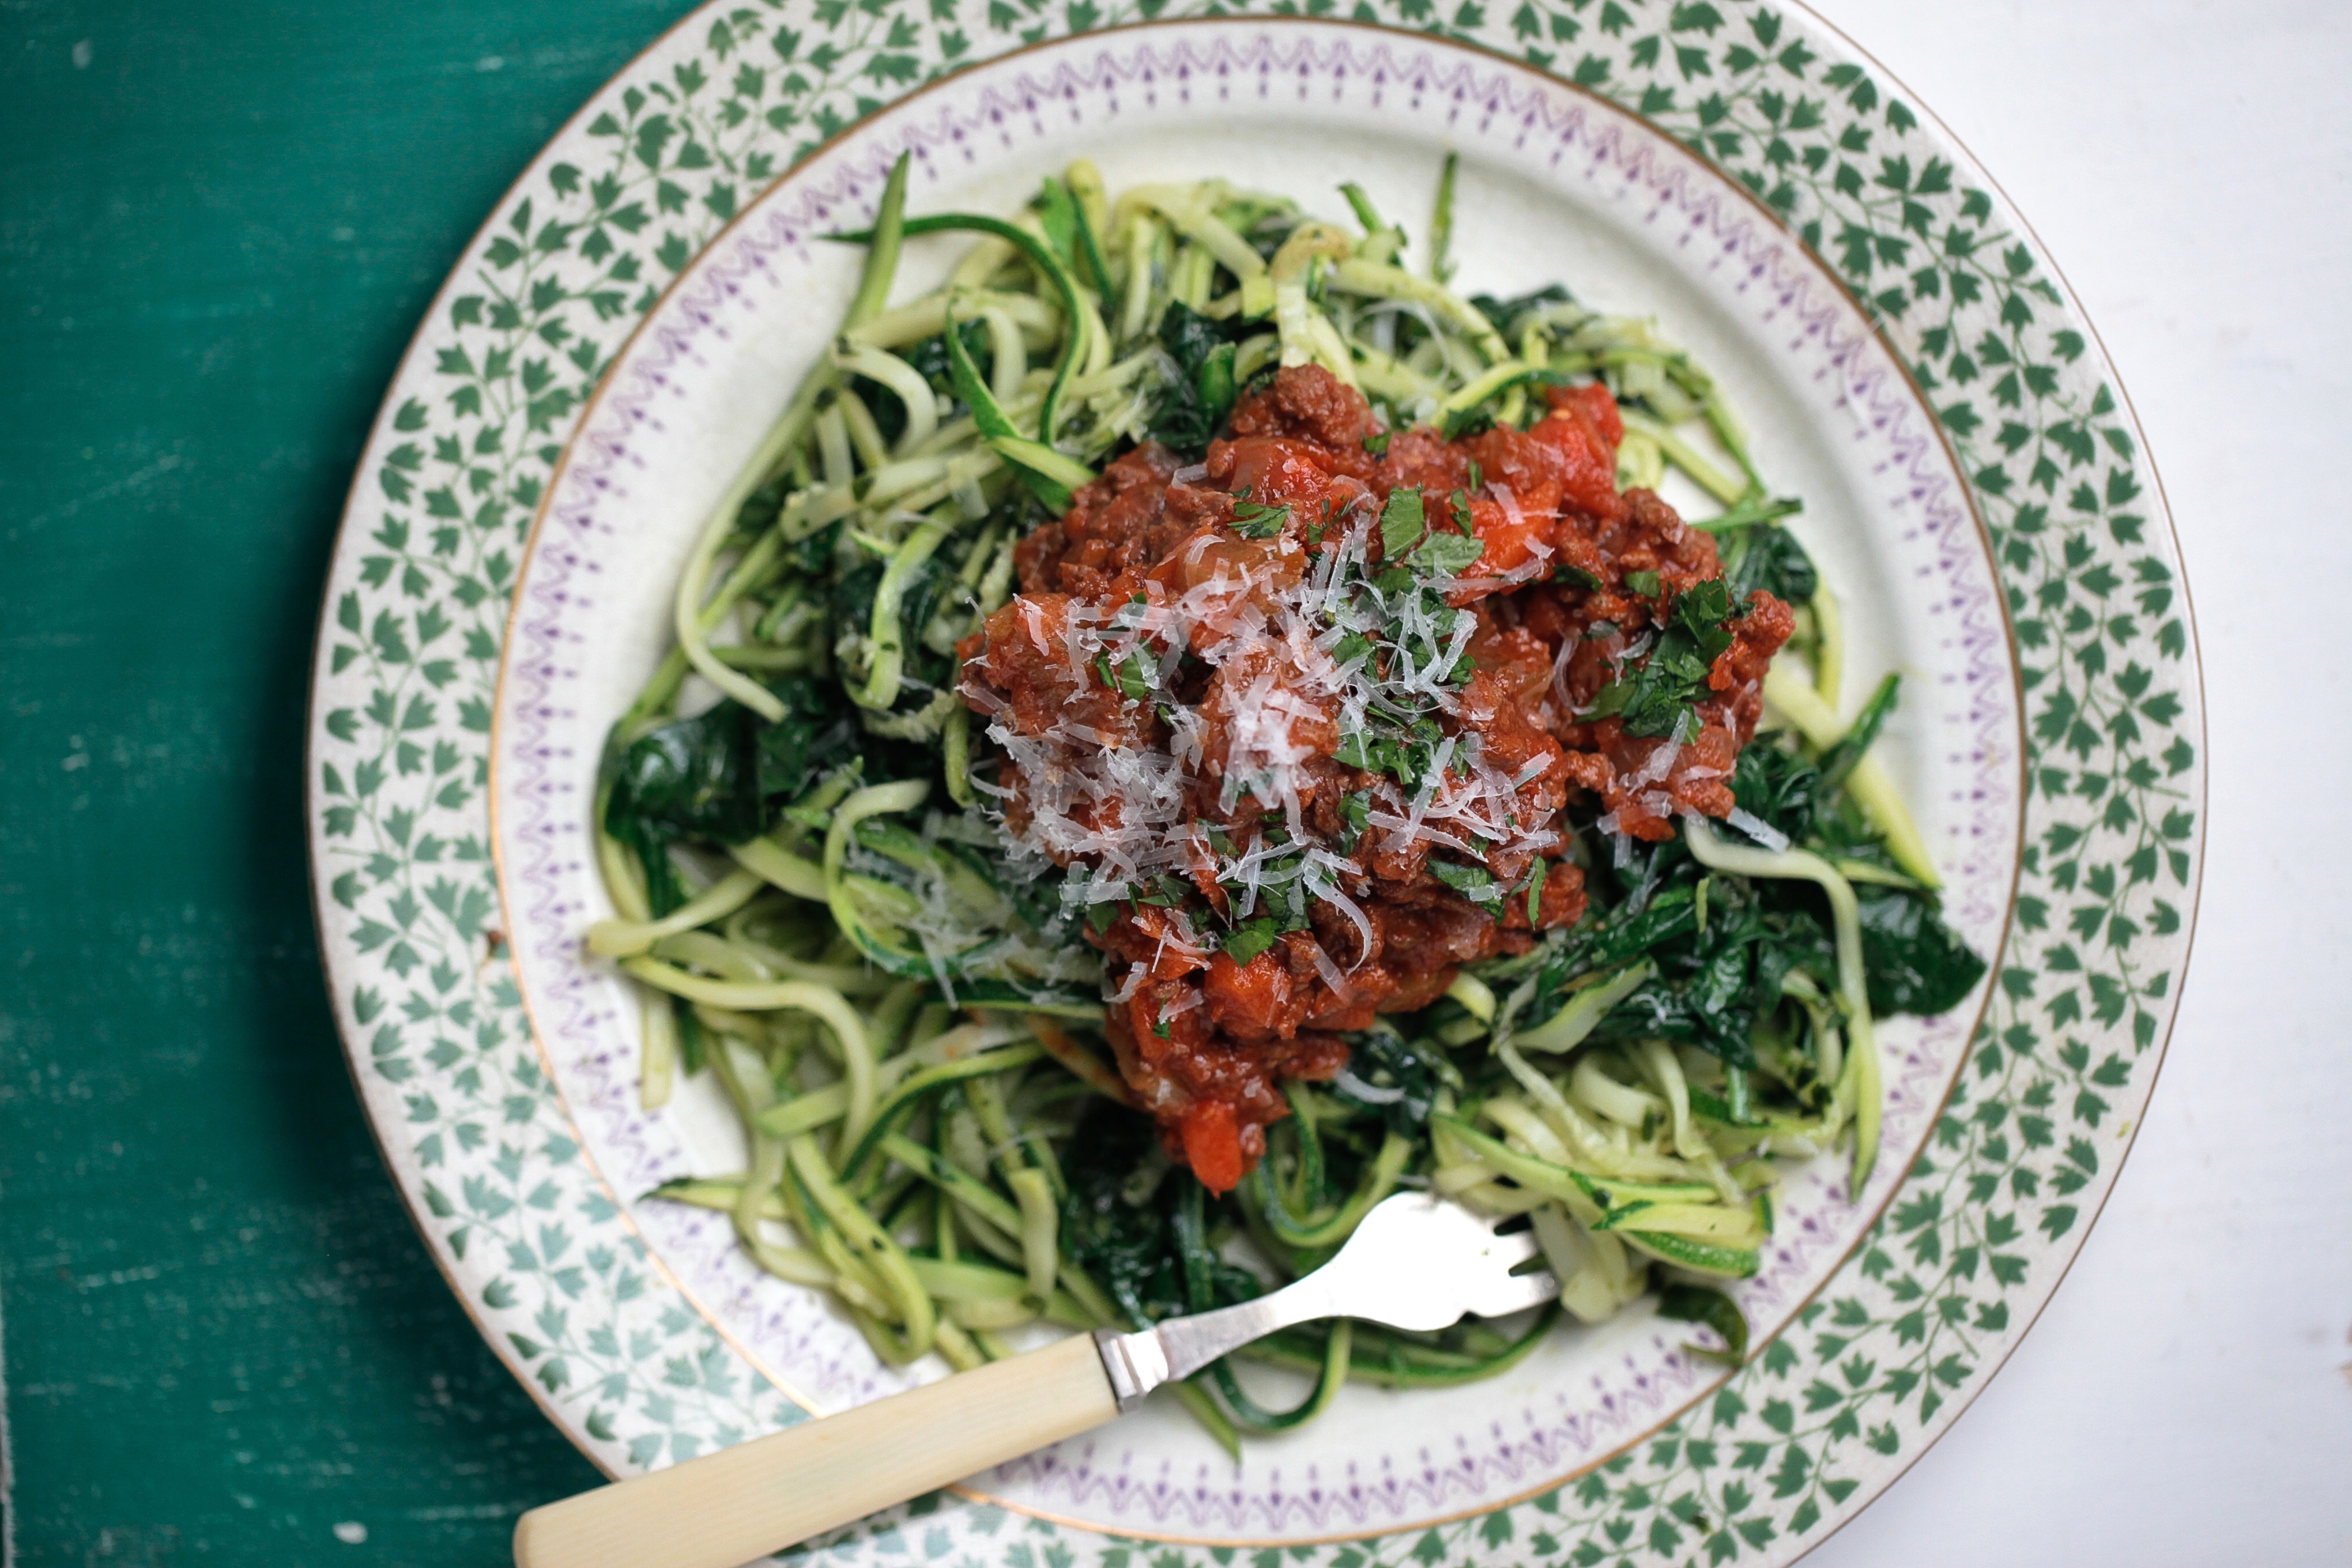 Spaghetti Bolognese recipe from Teresa Cutter of The Healthy Chef. (Paul Cutter / The Healthy Chef)